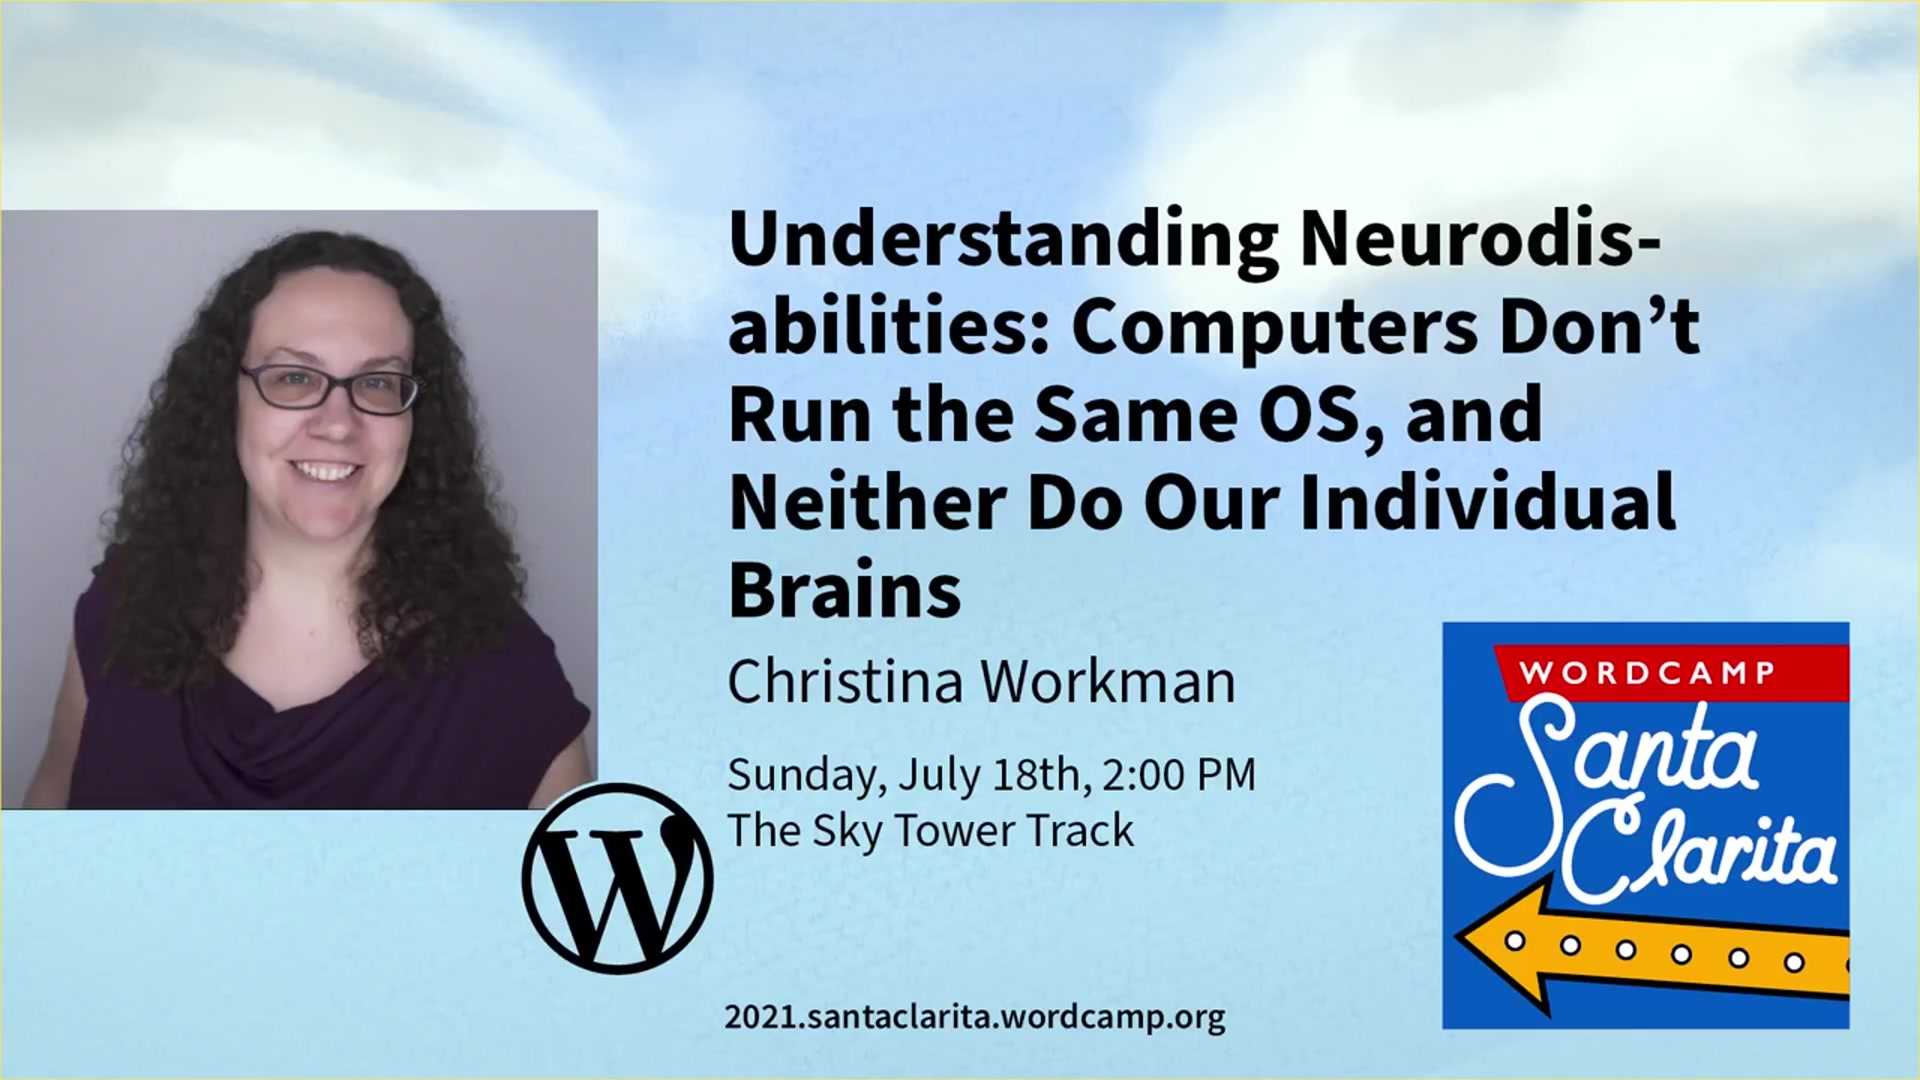 Christina Workman: Understanding Neurodisabilities: Computers Don’t Run the Same OS; Neither Do Our Individual Brains